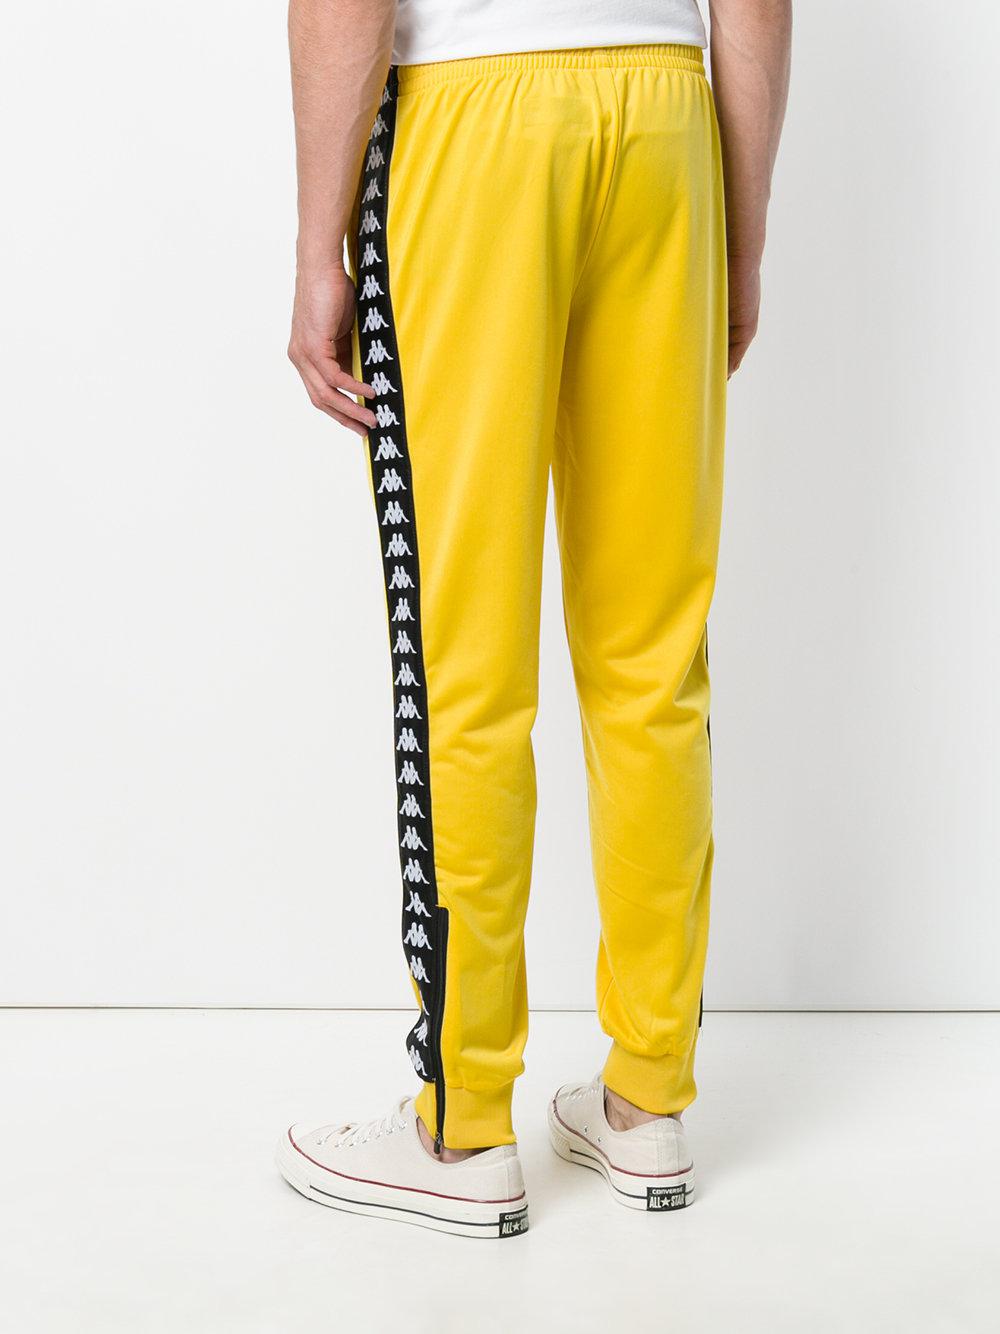 Kappa Side Stripe Track Pants in Yellow 